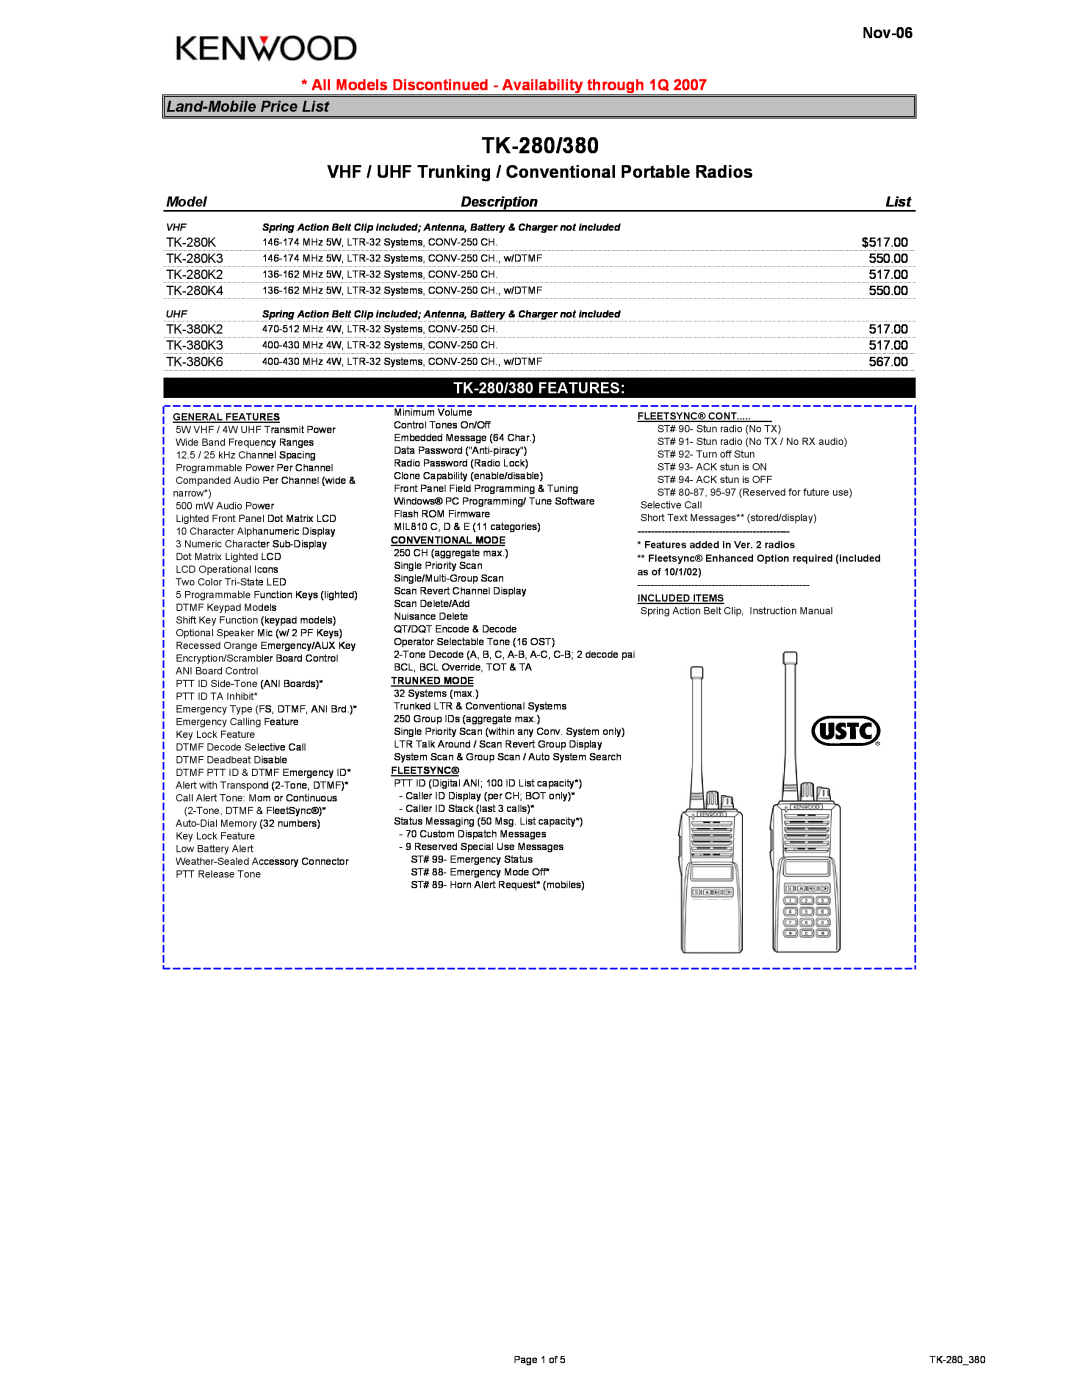 Kenwood instruction manual VHF / UHF Trunking / Conventional Portable Radios, Nov-06, TK-280/380 FEATURES, Model, List 